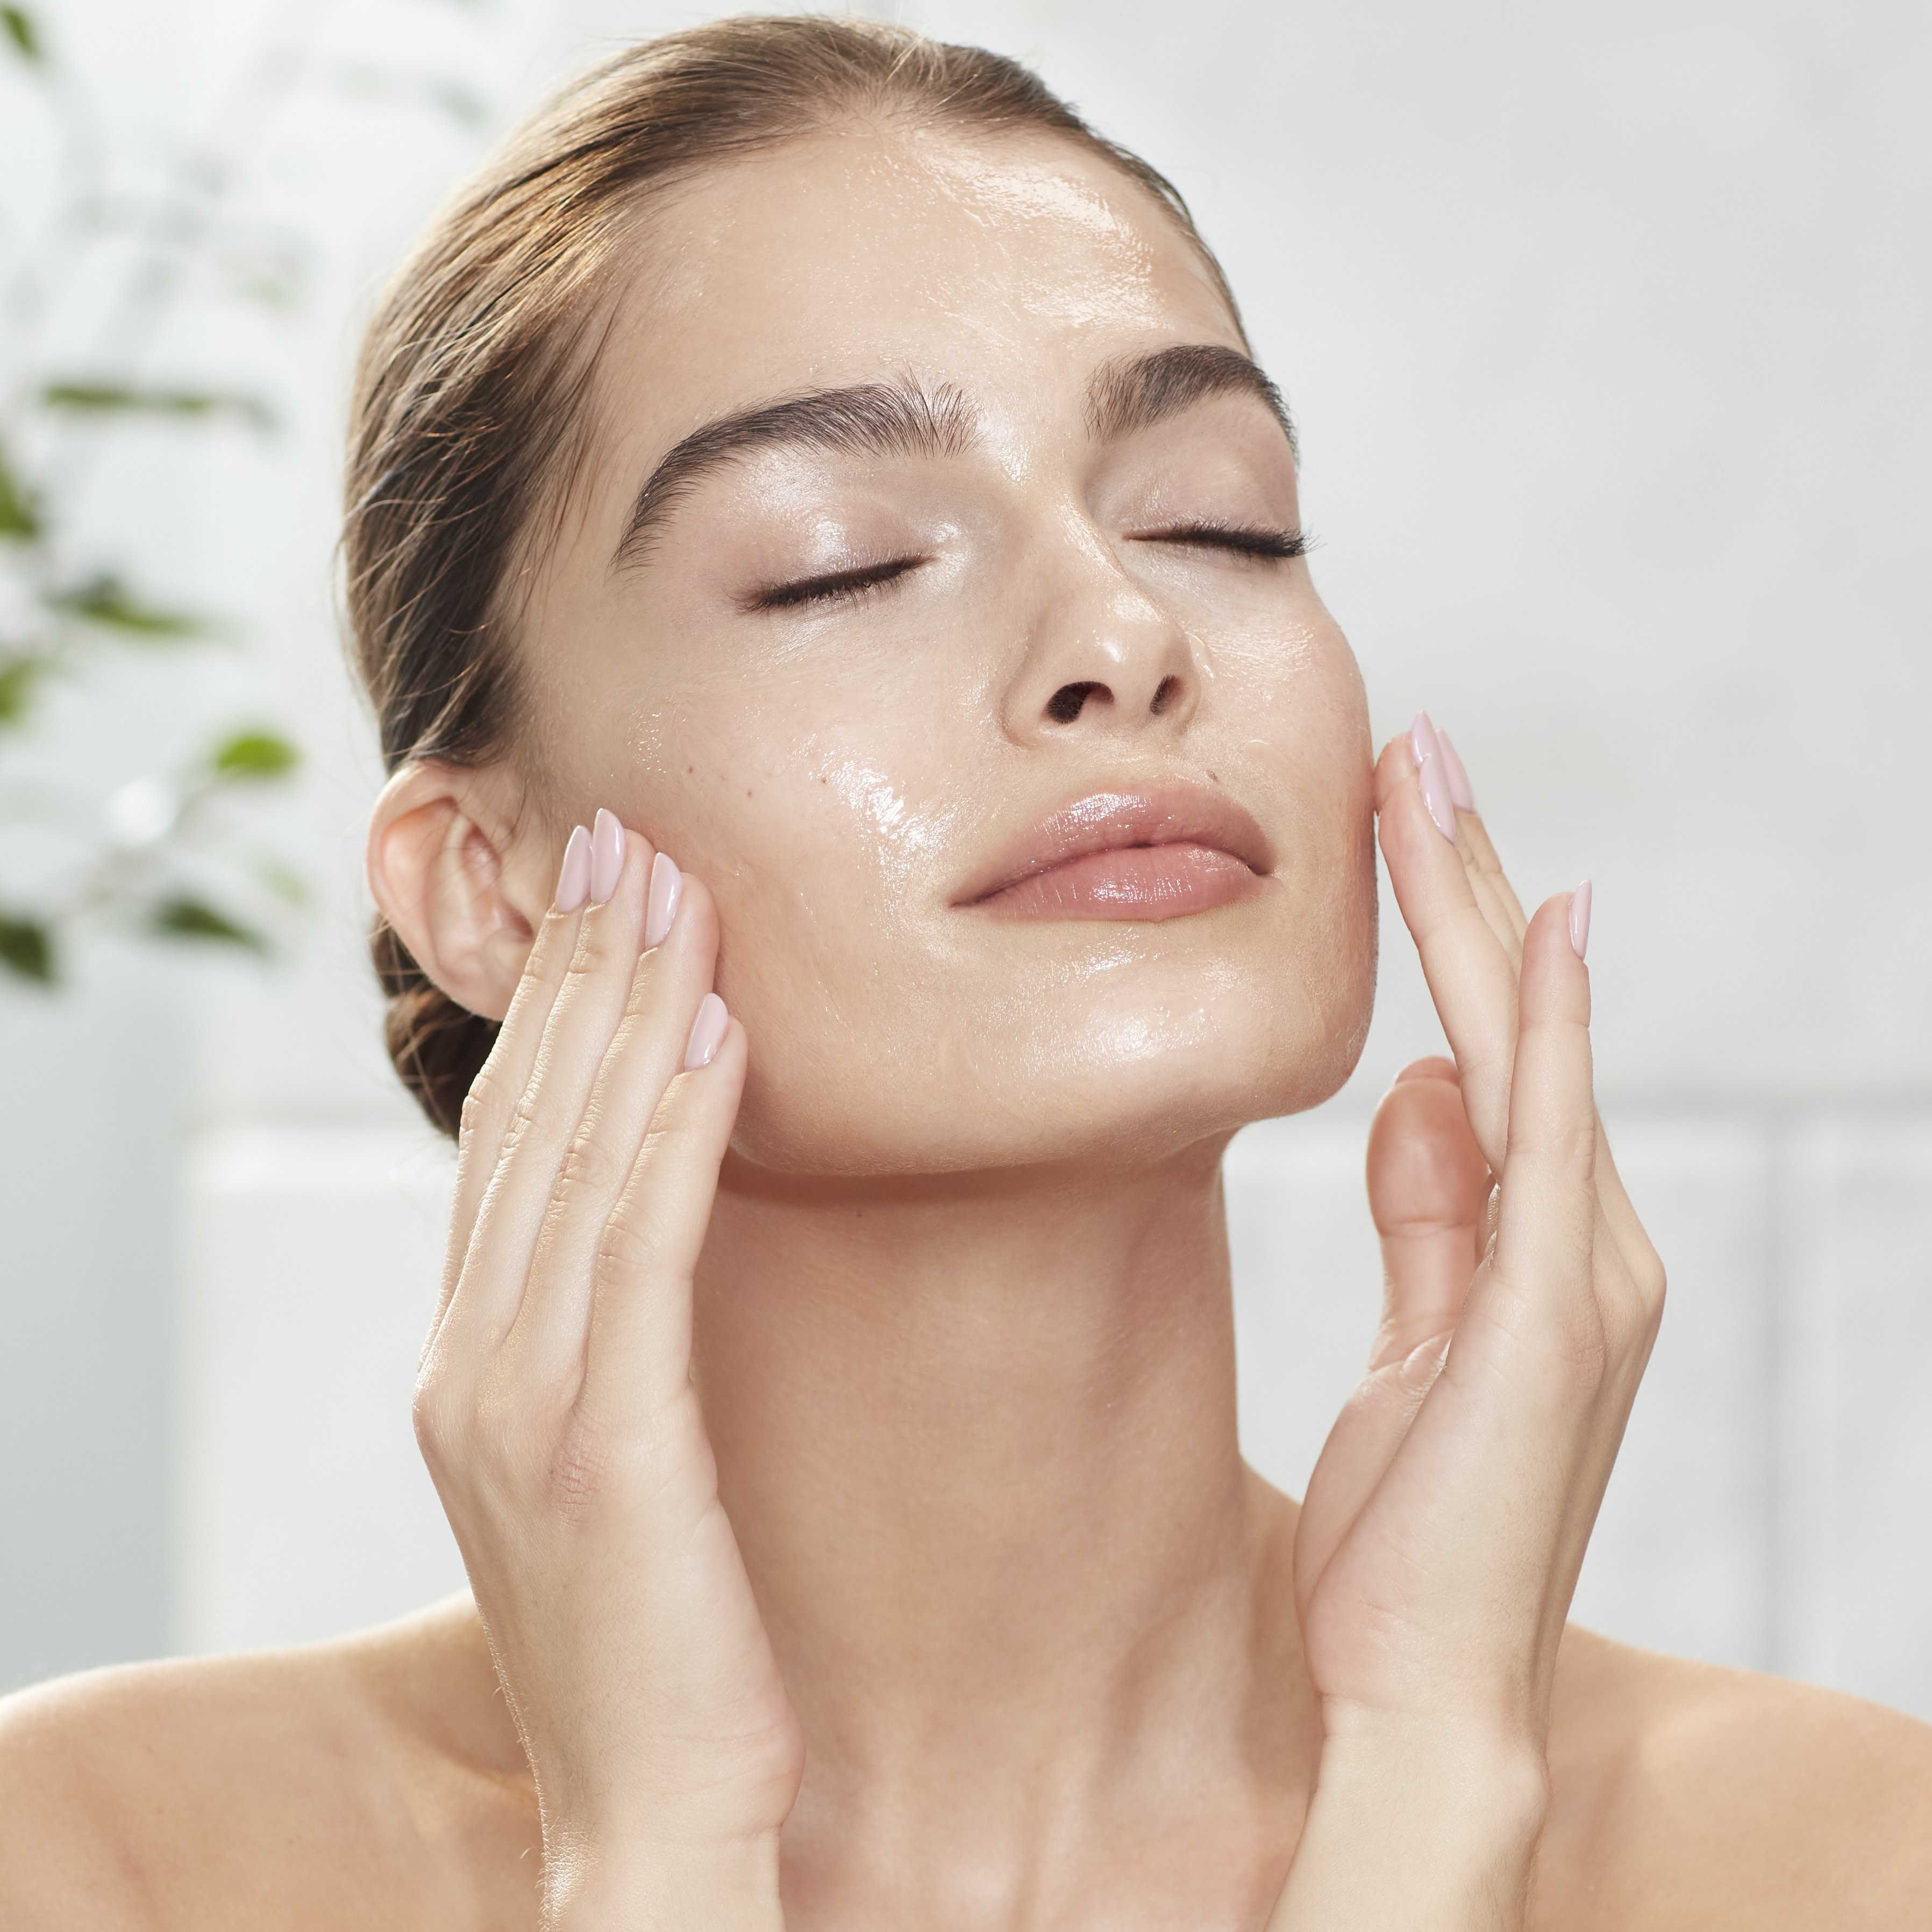 Model Adela applies Super Radiance Resurfacing Facial face exfoliator